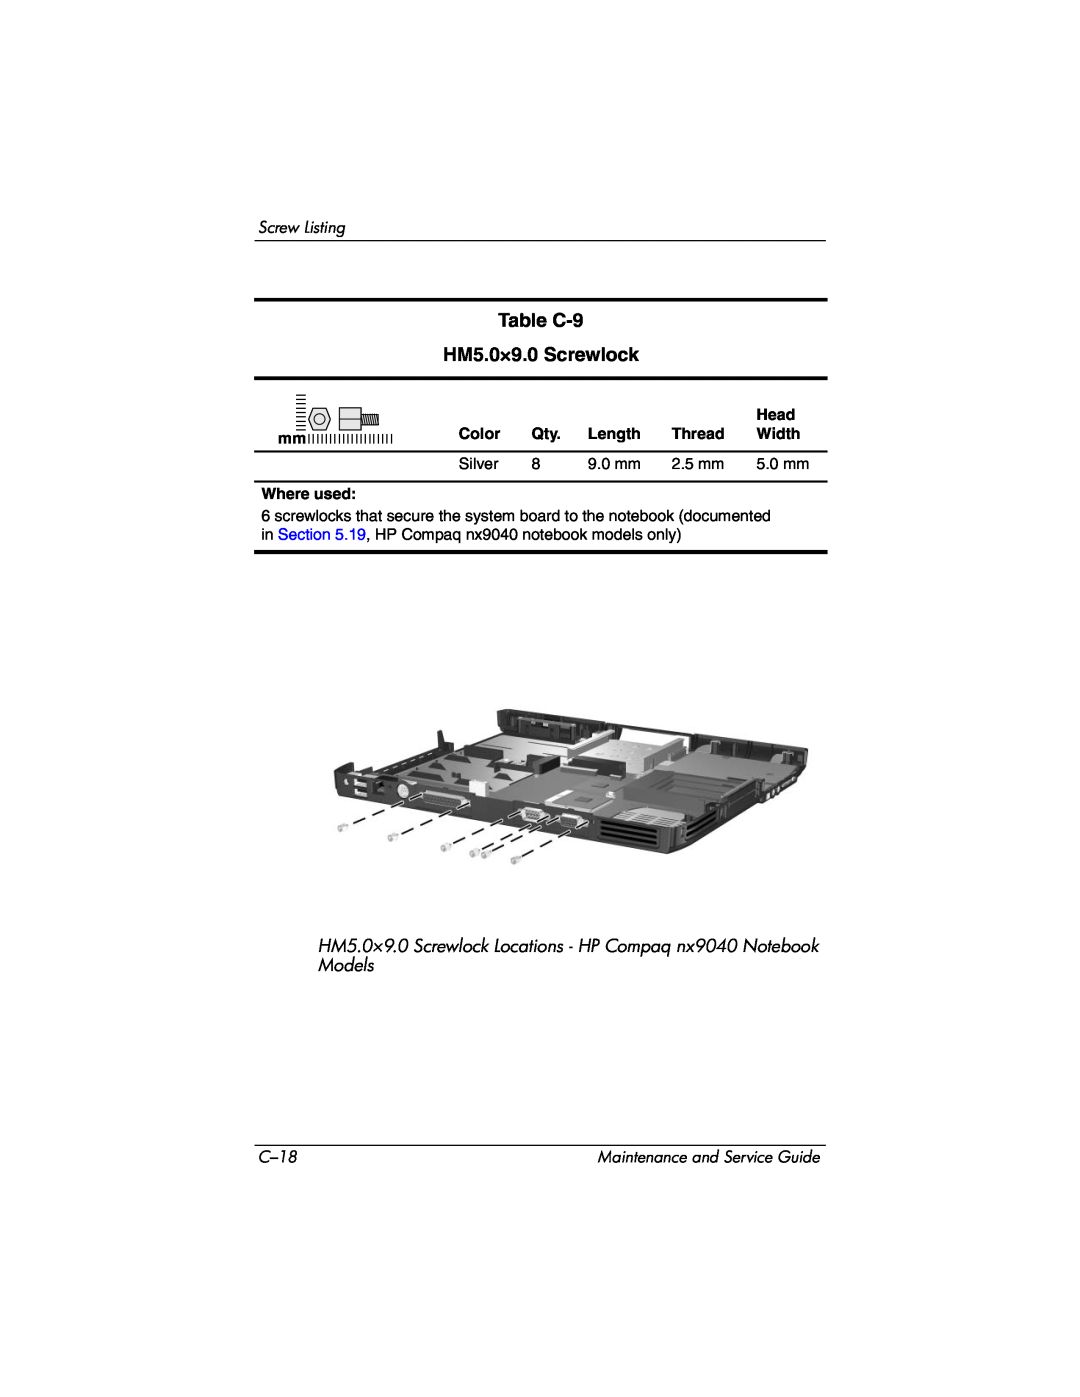 HP NX9020 Table C-9 HM5.0×9.0 Screwlock, HM5.0×9.0 Screwlock Locations - HP Compaq nx9040 Notebook Models, Screw Listing 